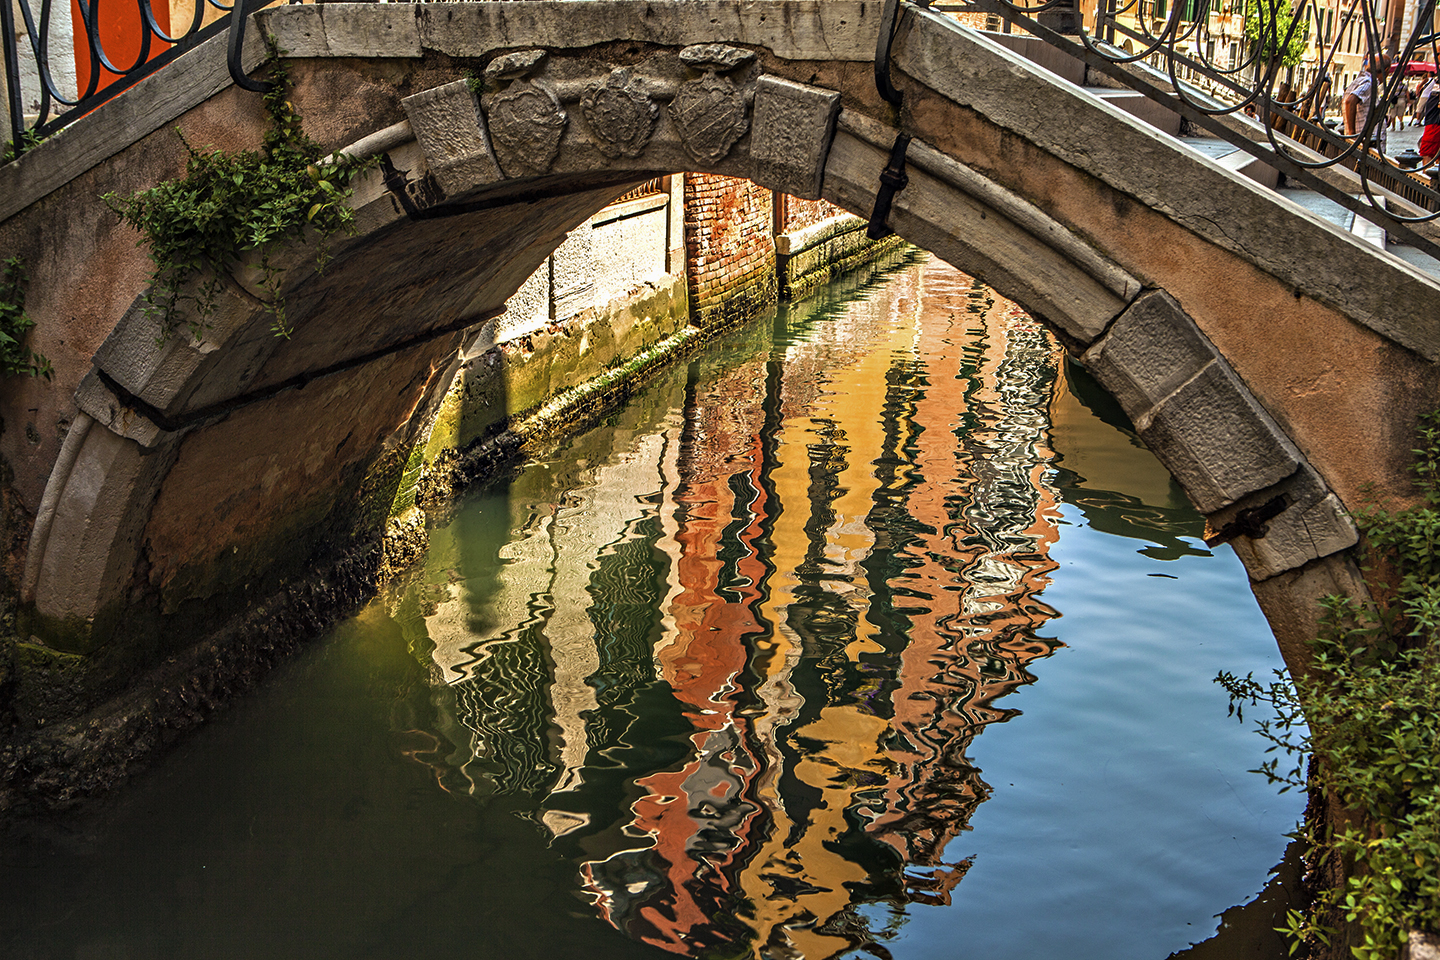 reflections under a bridge